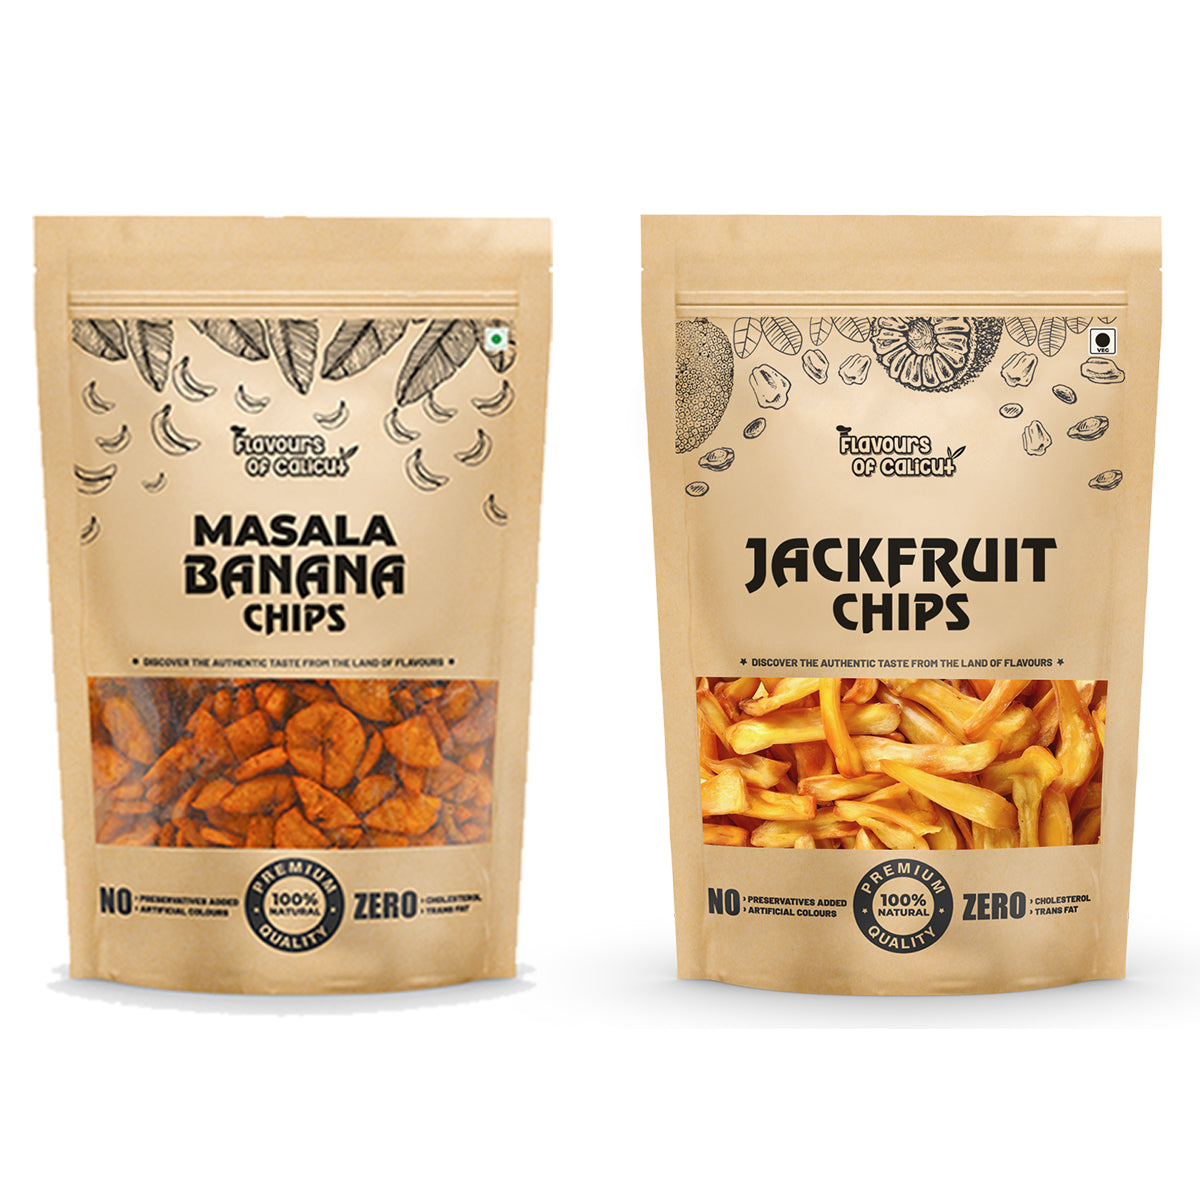 Kerala Chips Combo - Jackfruit Chips (500g) & Masala Banana Chips (500g) - 1kg